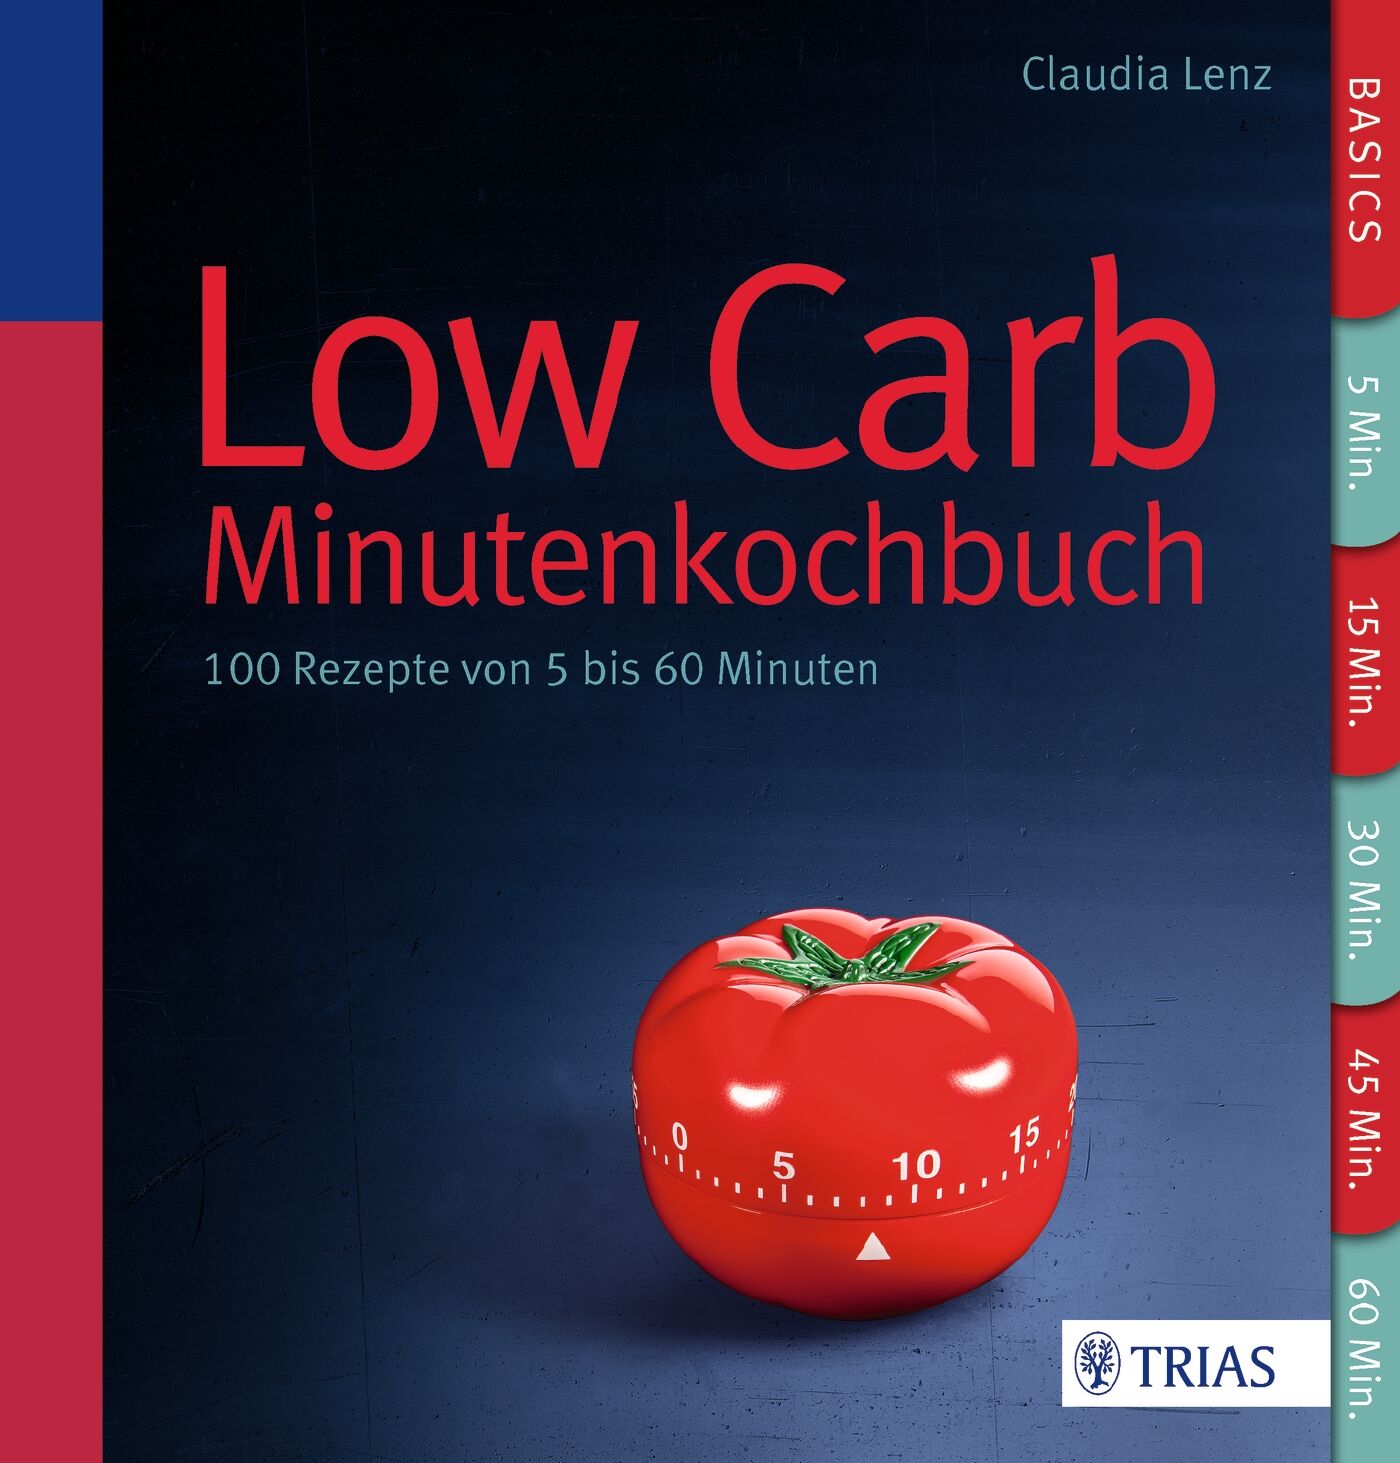 Low Carb - Minutenkochbuch, 9783830480013